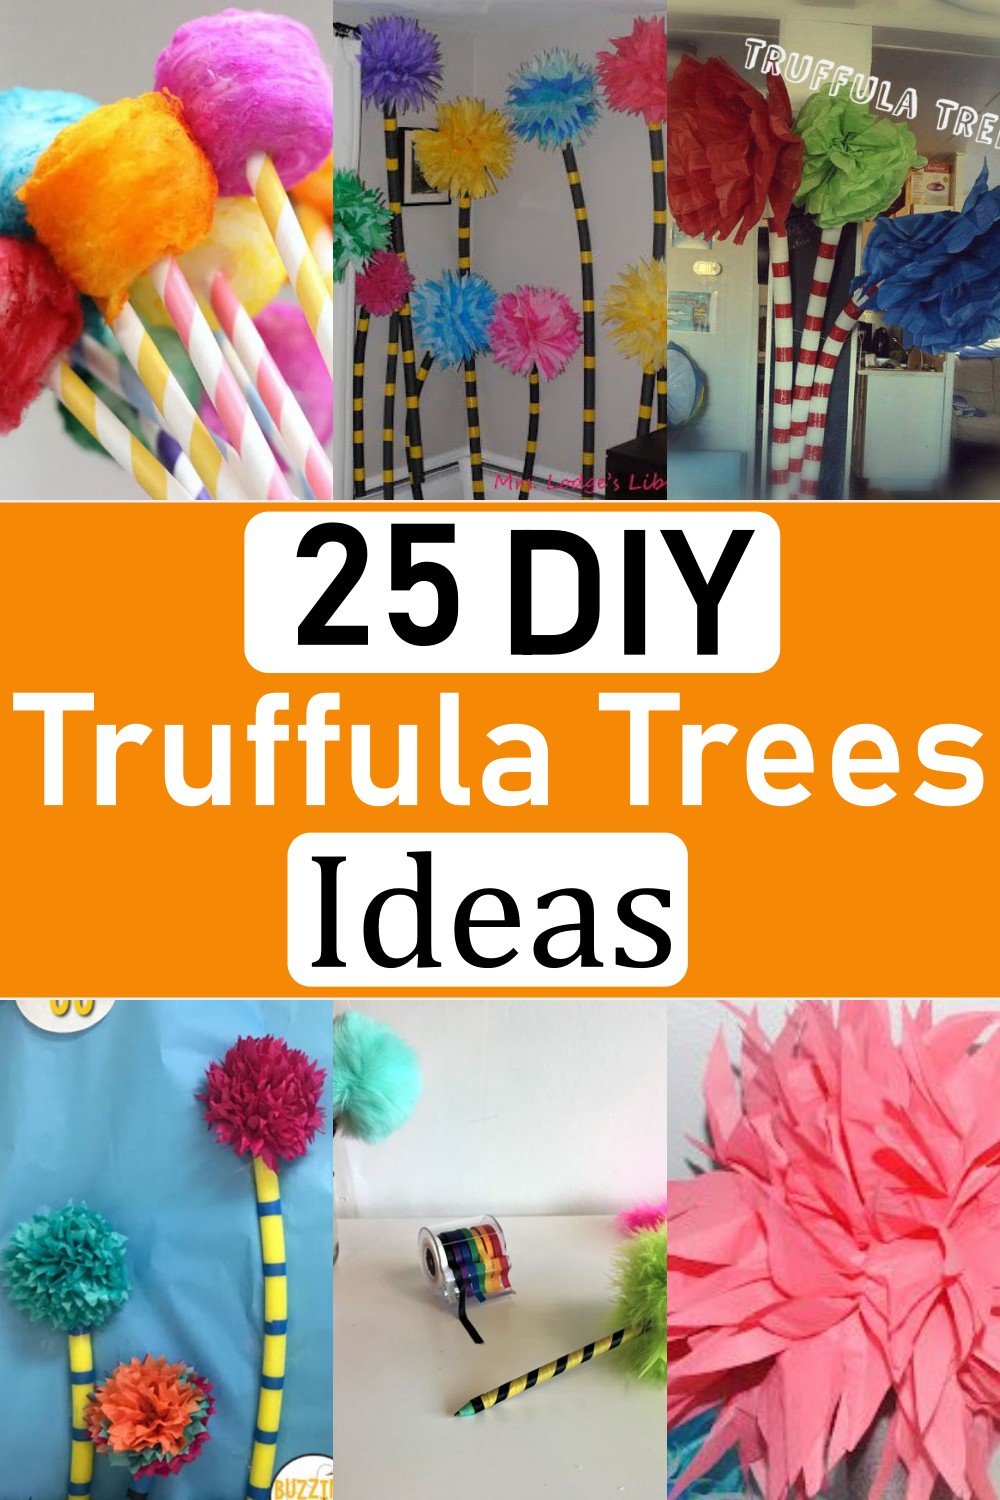 Truffula Trees